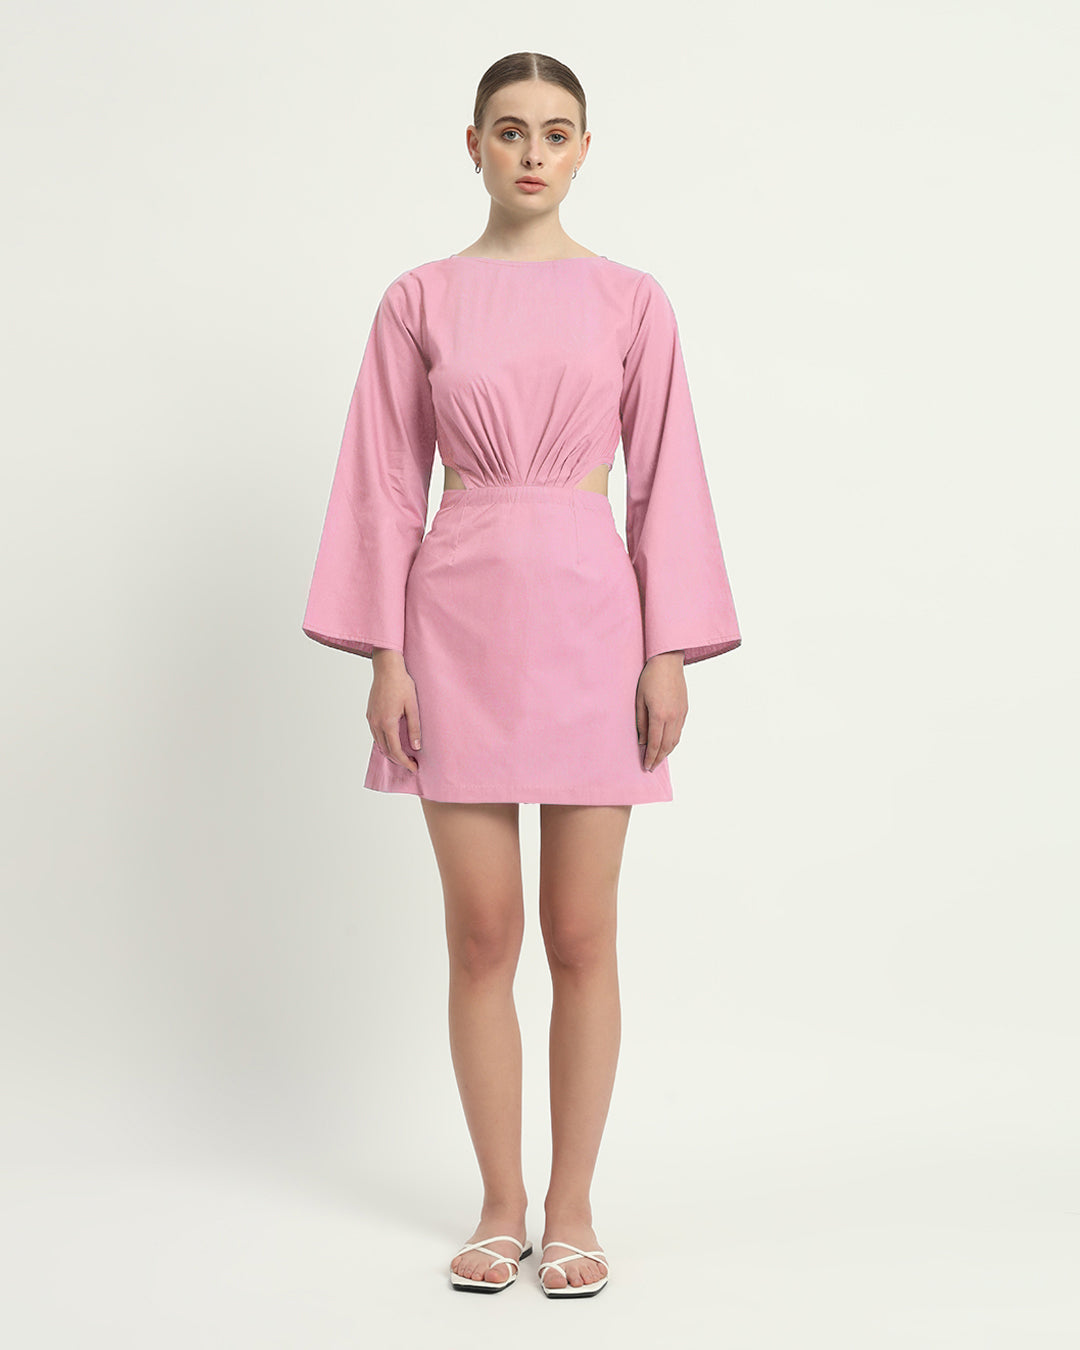 The Eloy Fondant Pink Cotton Dress